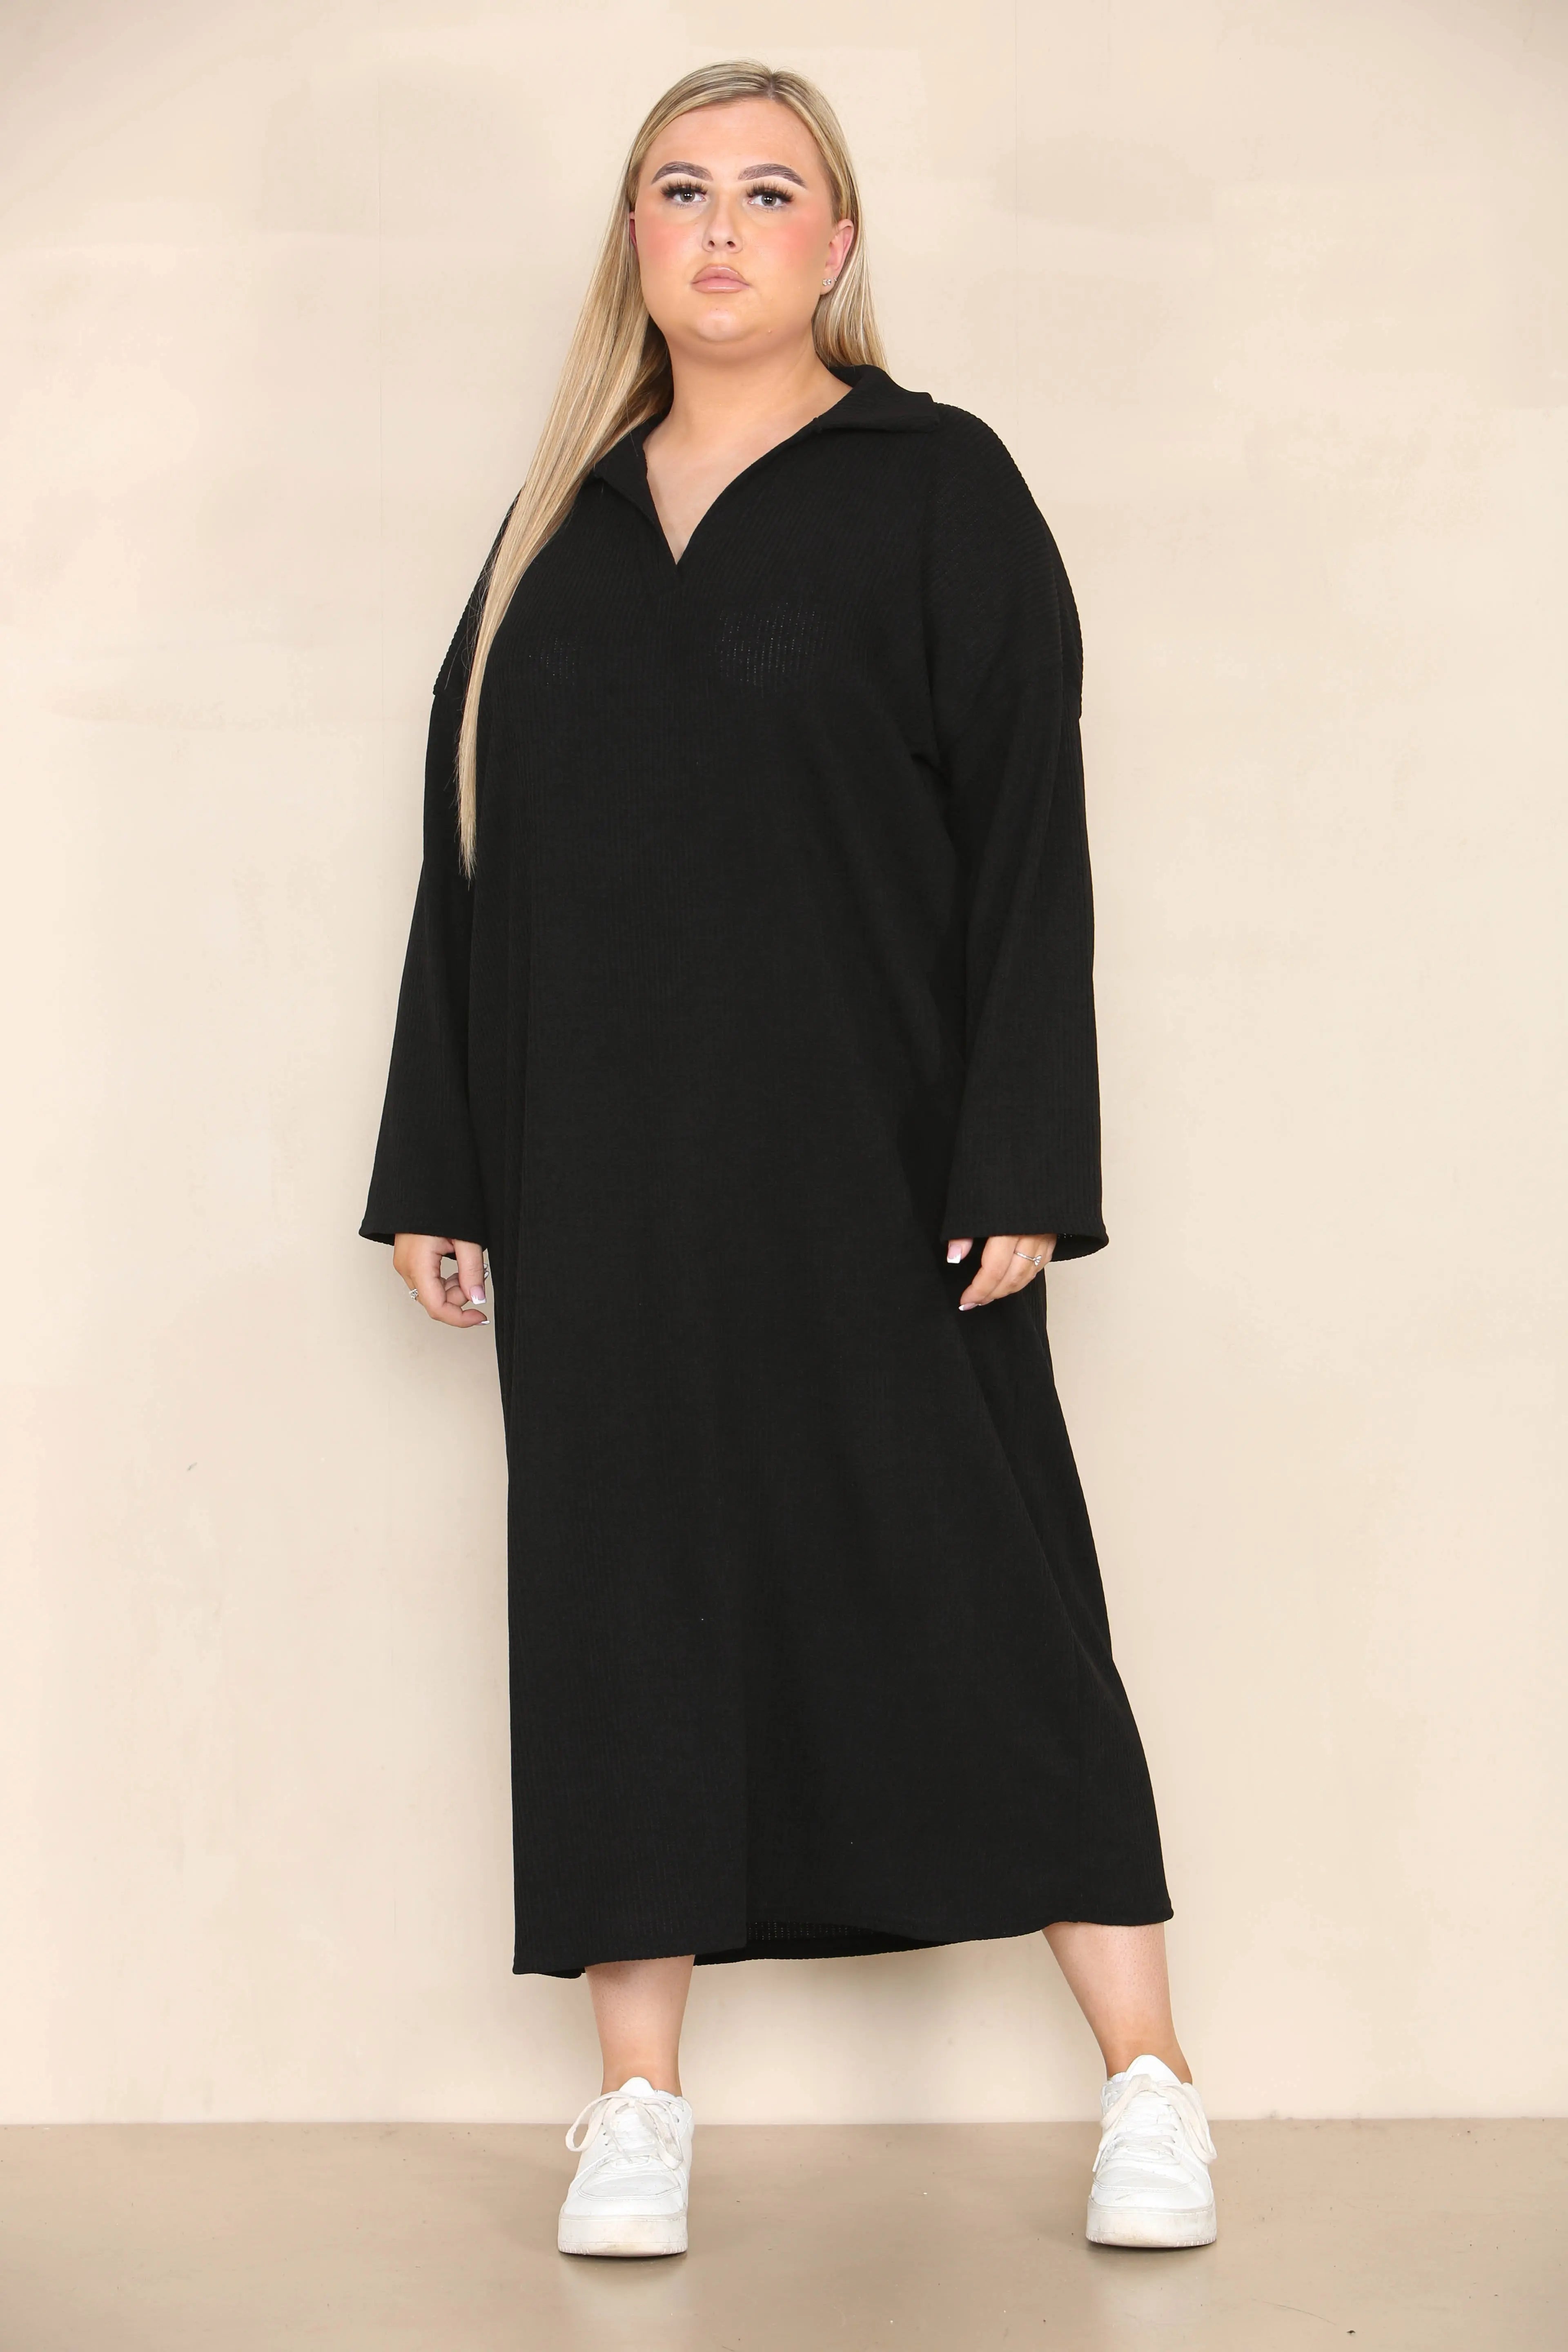 KATCH ME Black Casual Loungewear V Neck Lapel Corduroy Long Sleeve Loose Dress Dress 37.99